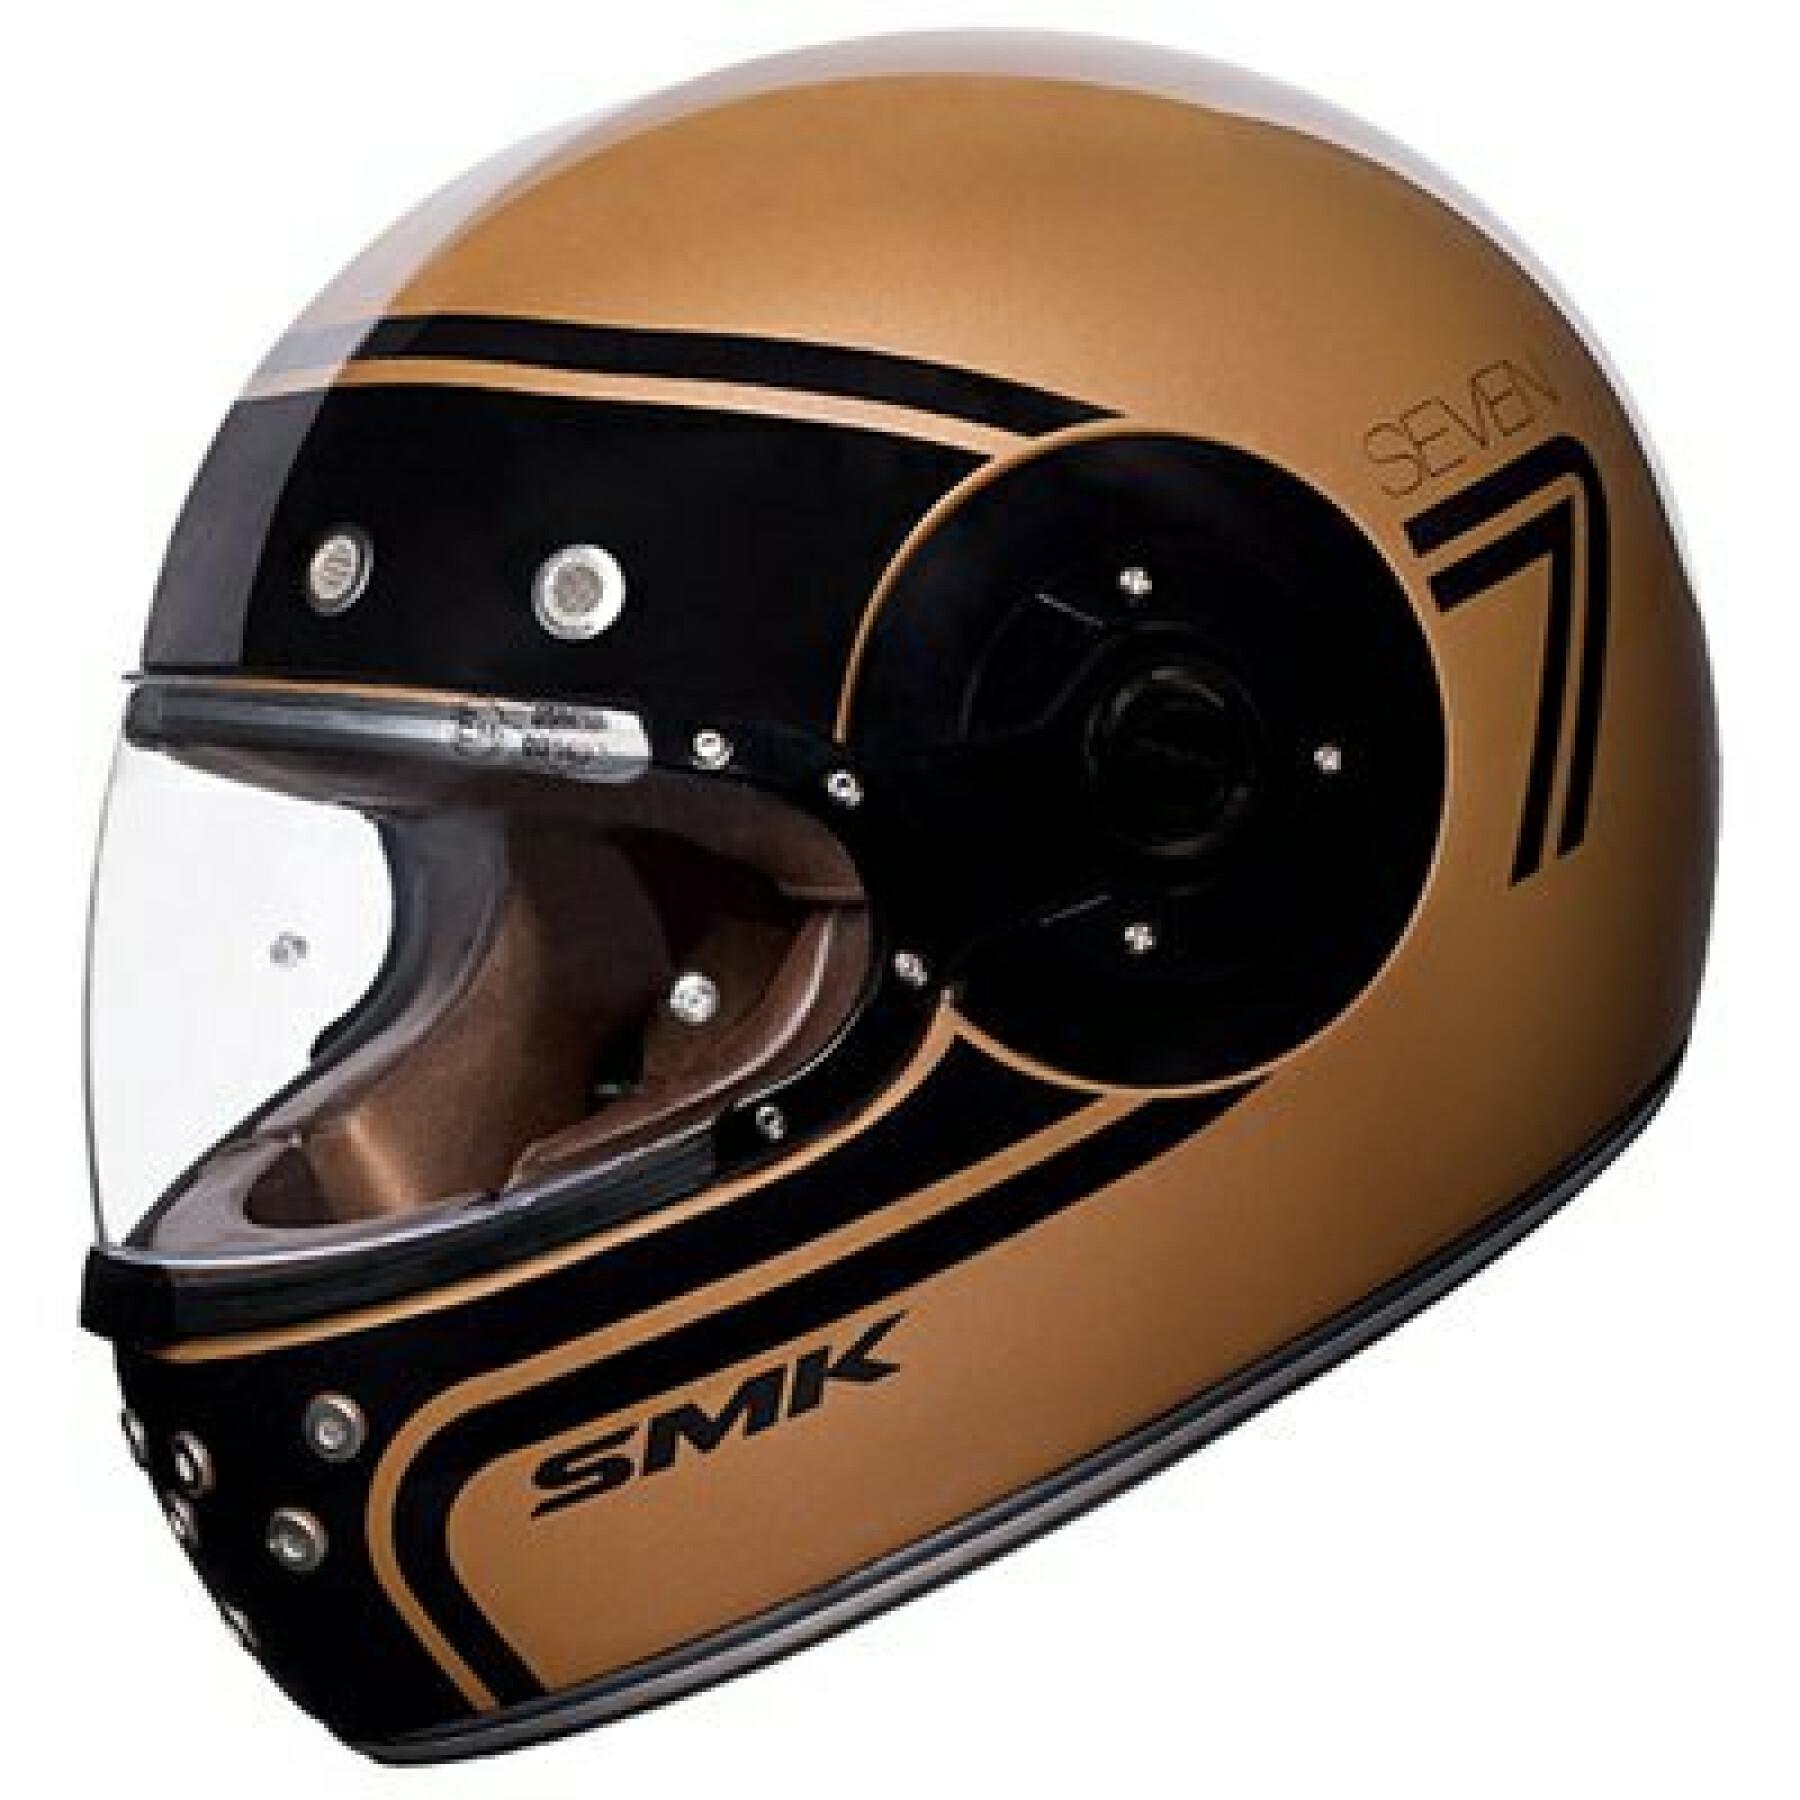 Full face motorcycle helmet SMK retro seven